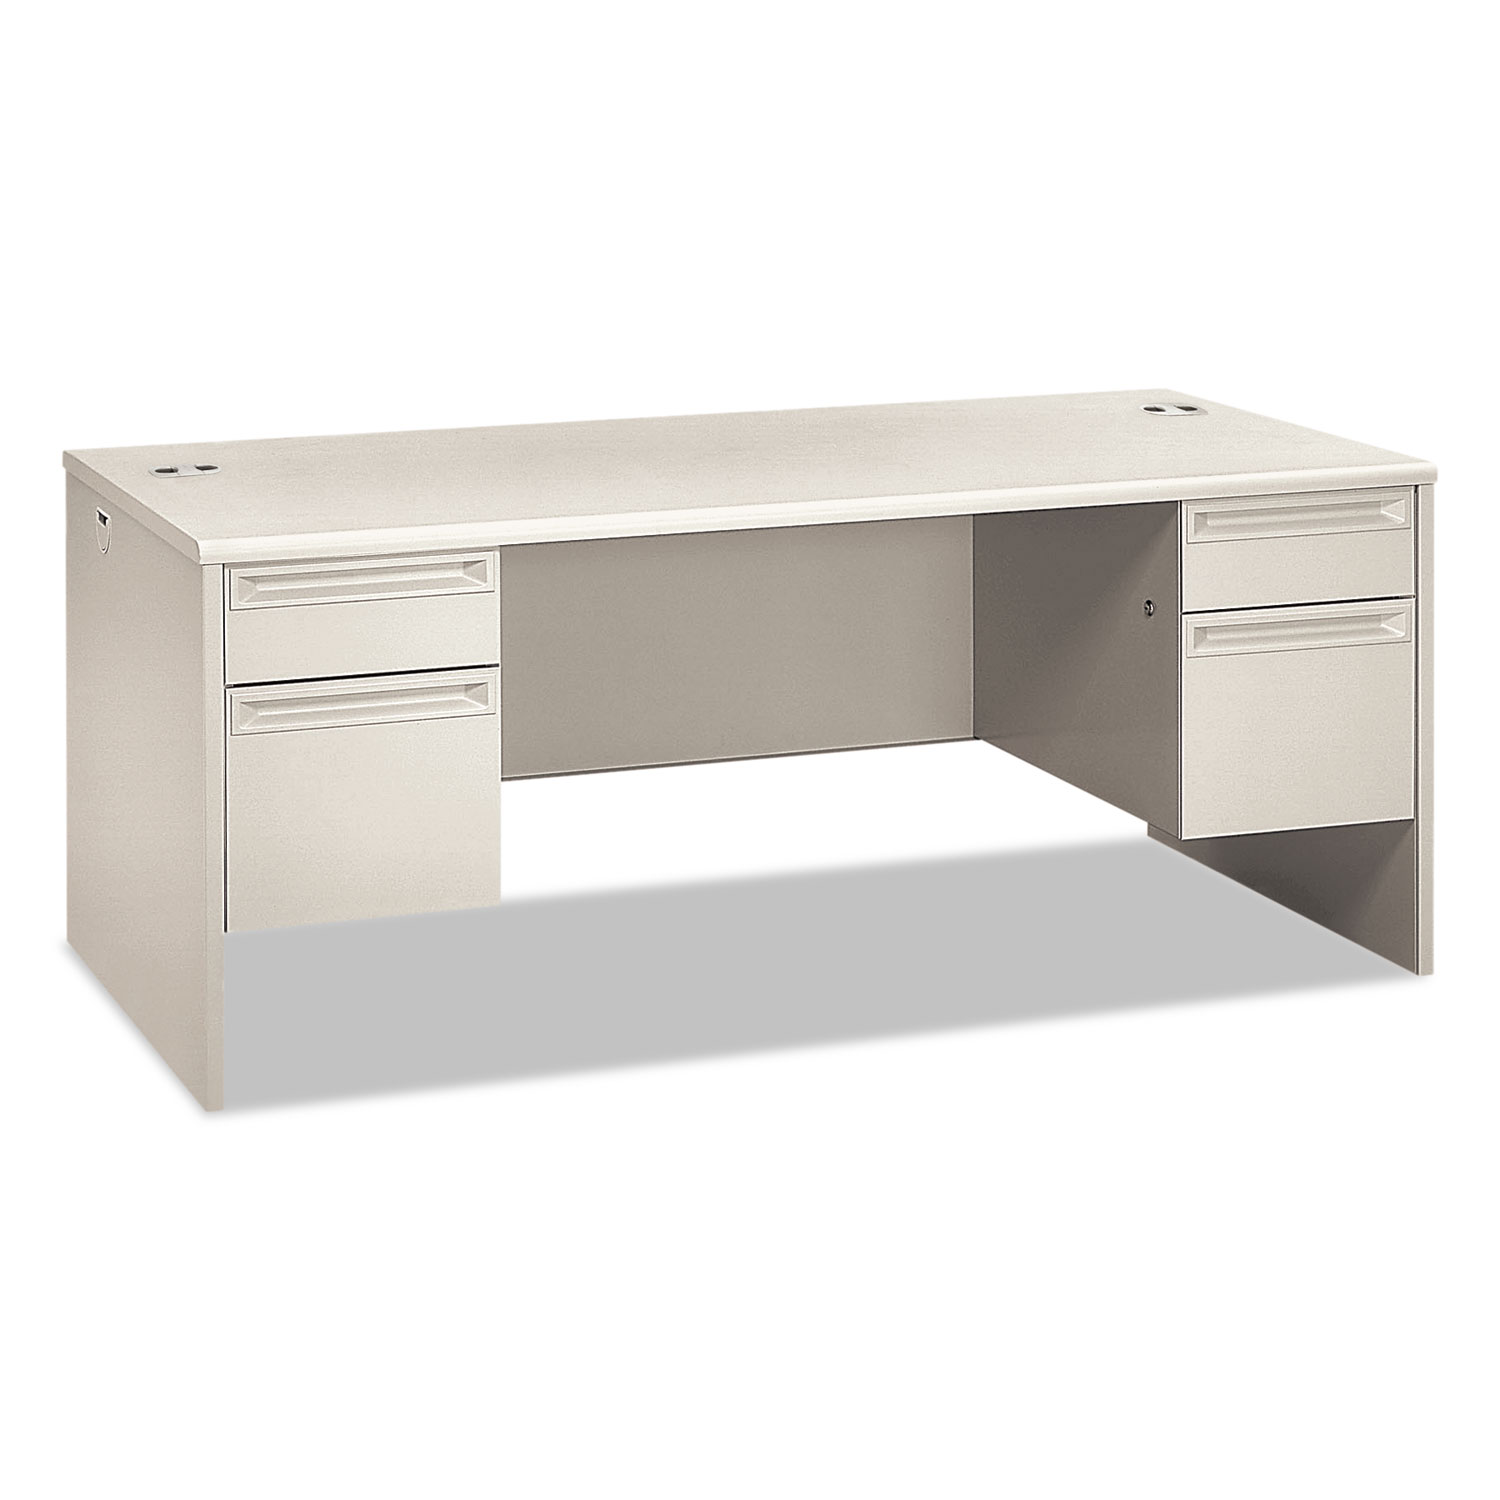 38000 Series Double Pedestal Desk, 72w x 36d x 29-1/2h, Light Gray